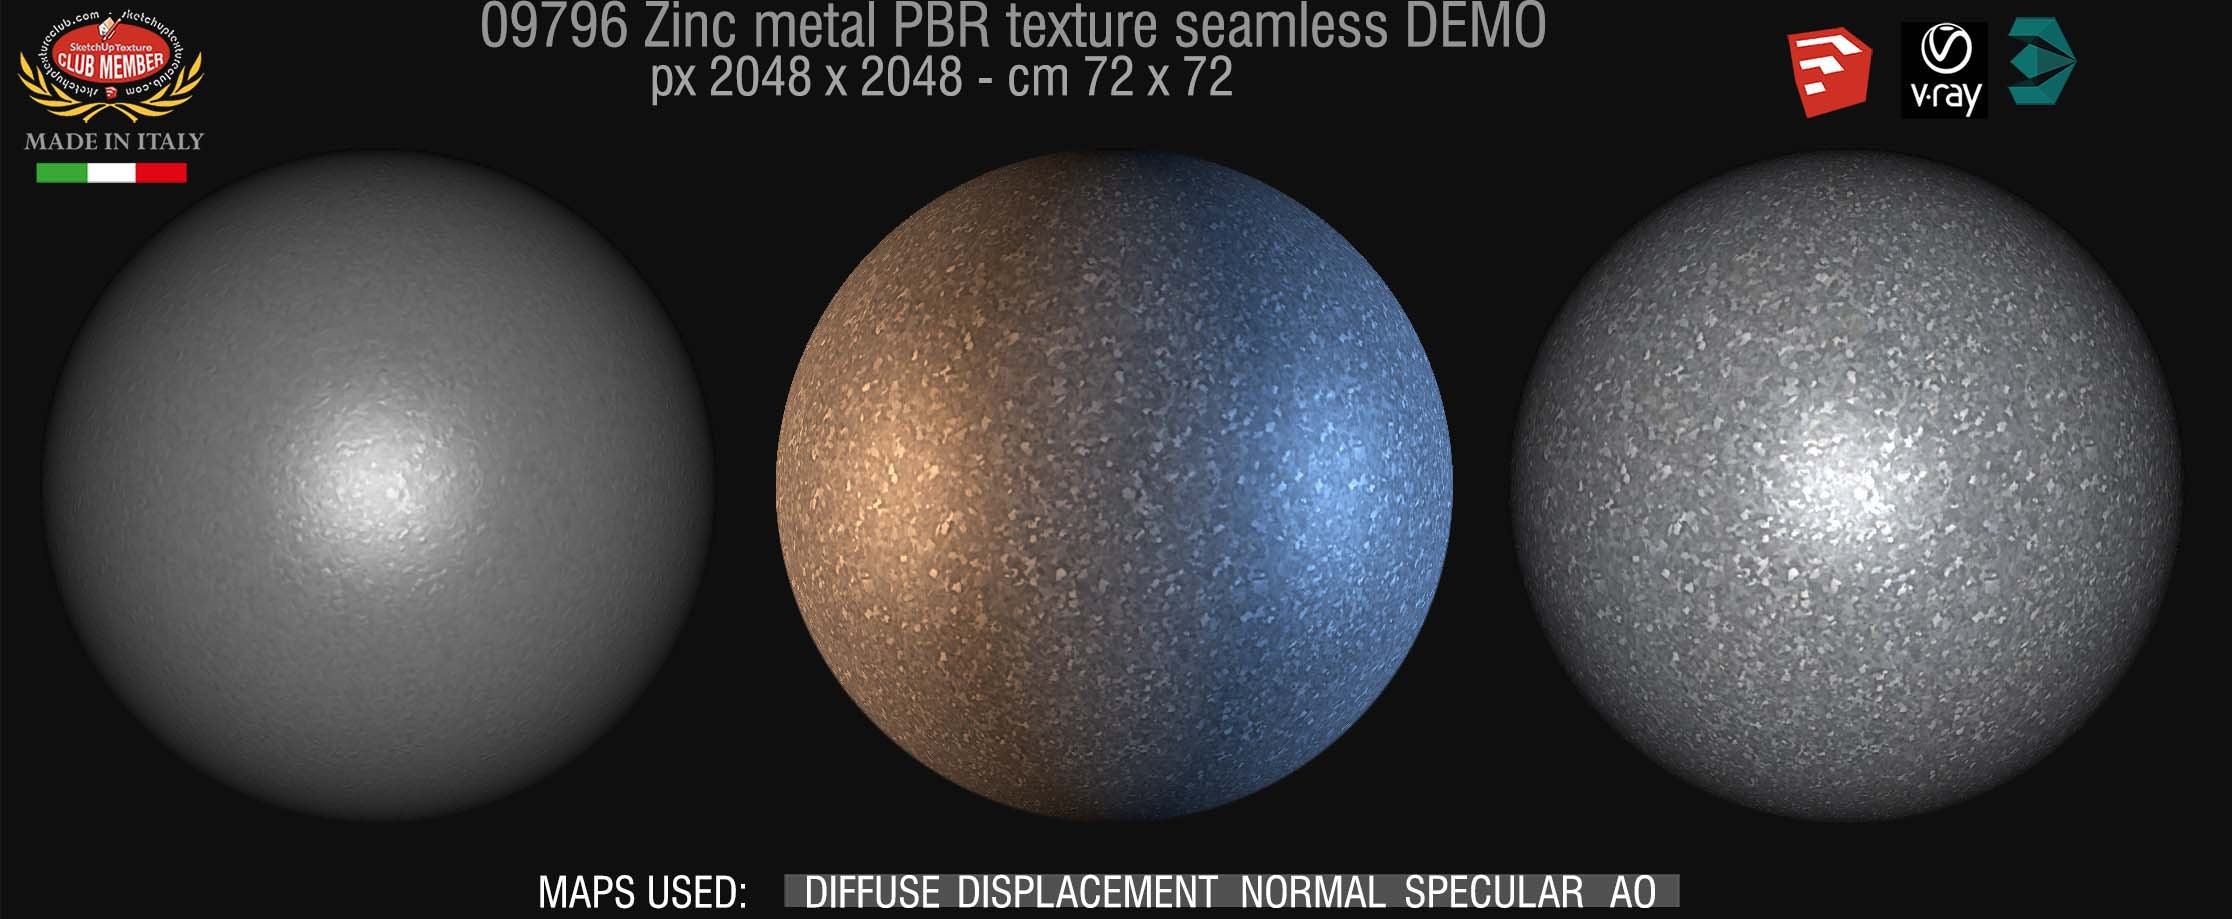 09796 Zinc metal PBR texture seamless DEMO